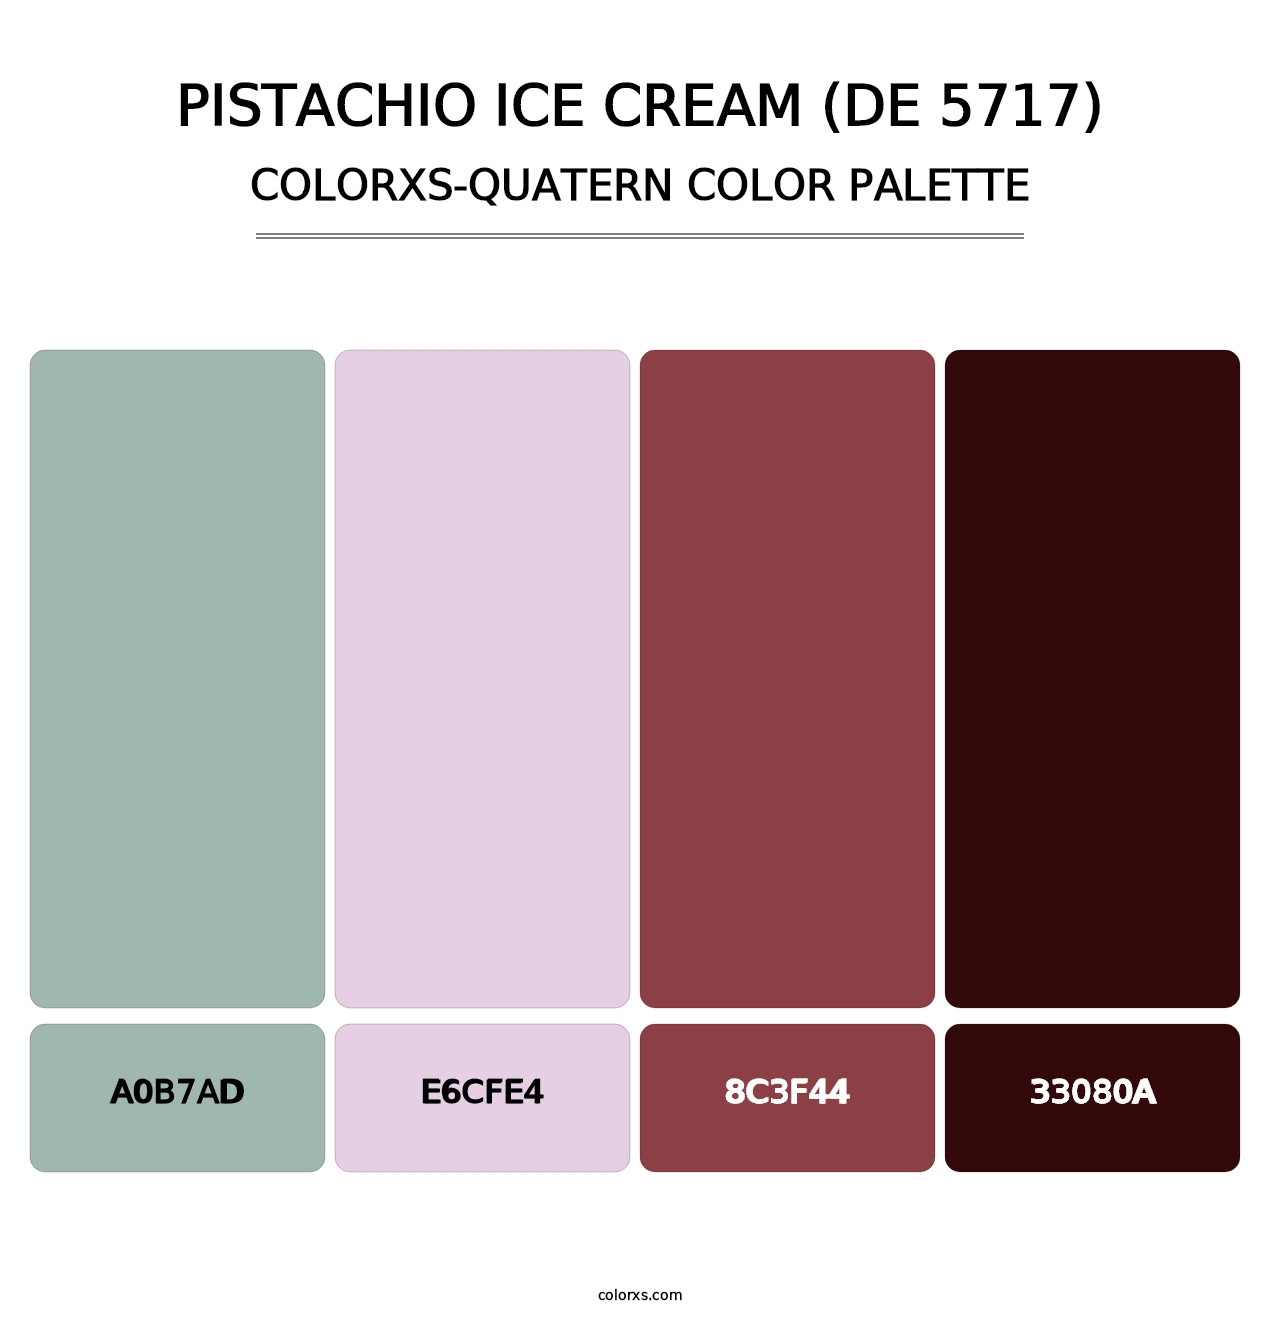 Pistachio Ice Cream (DE 5717) - Colorxs Quatern Palette